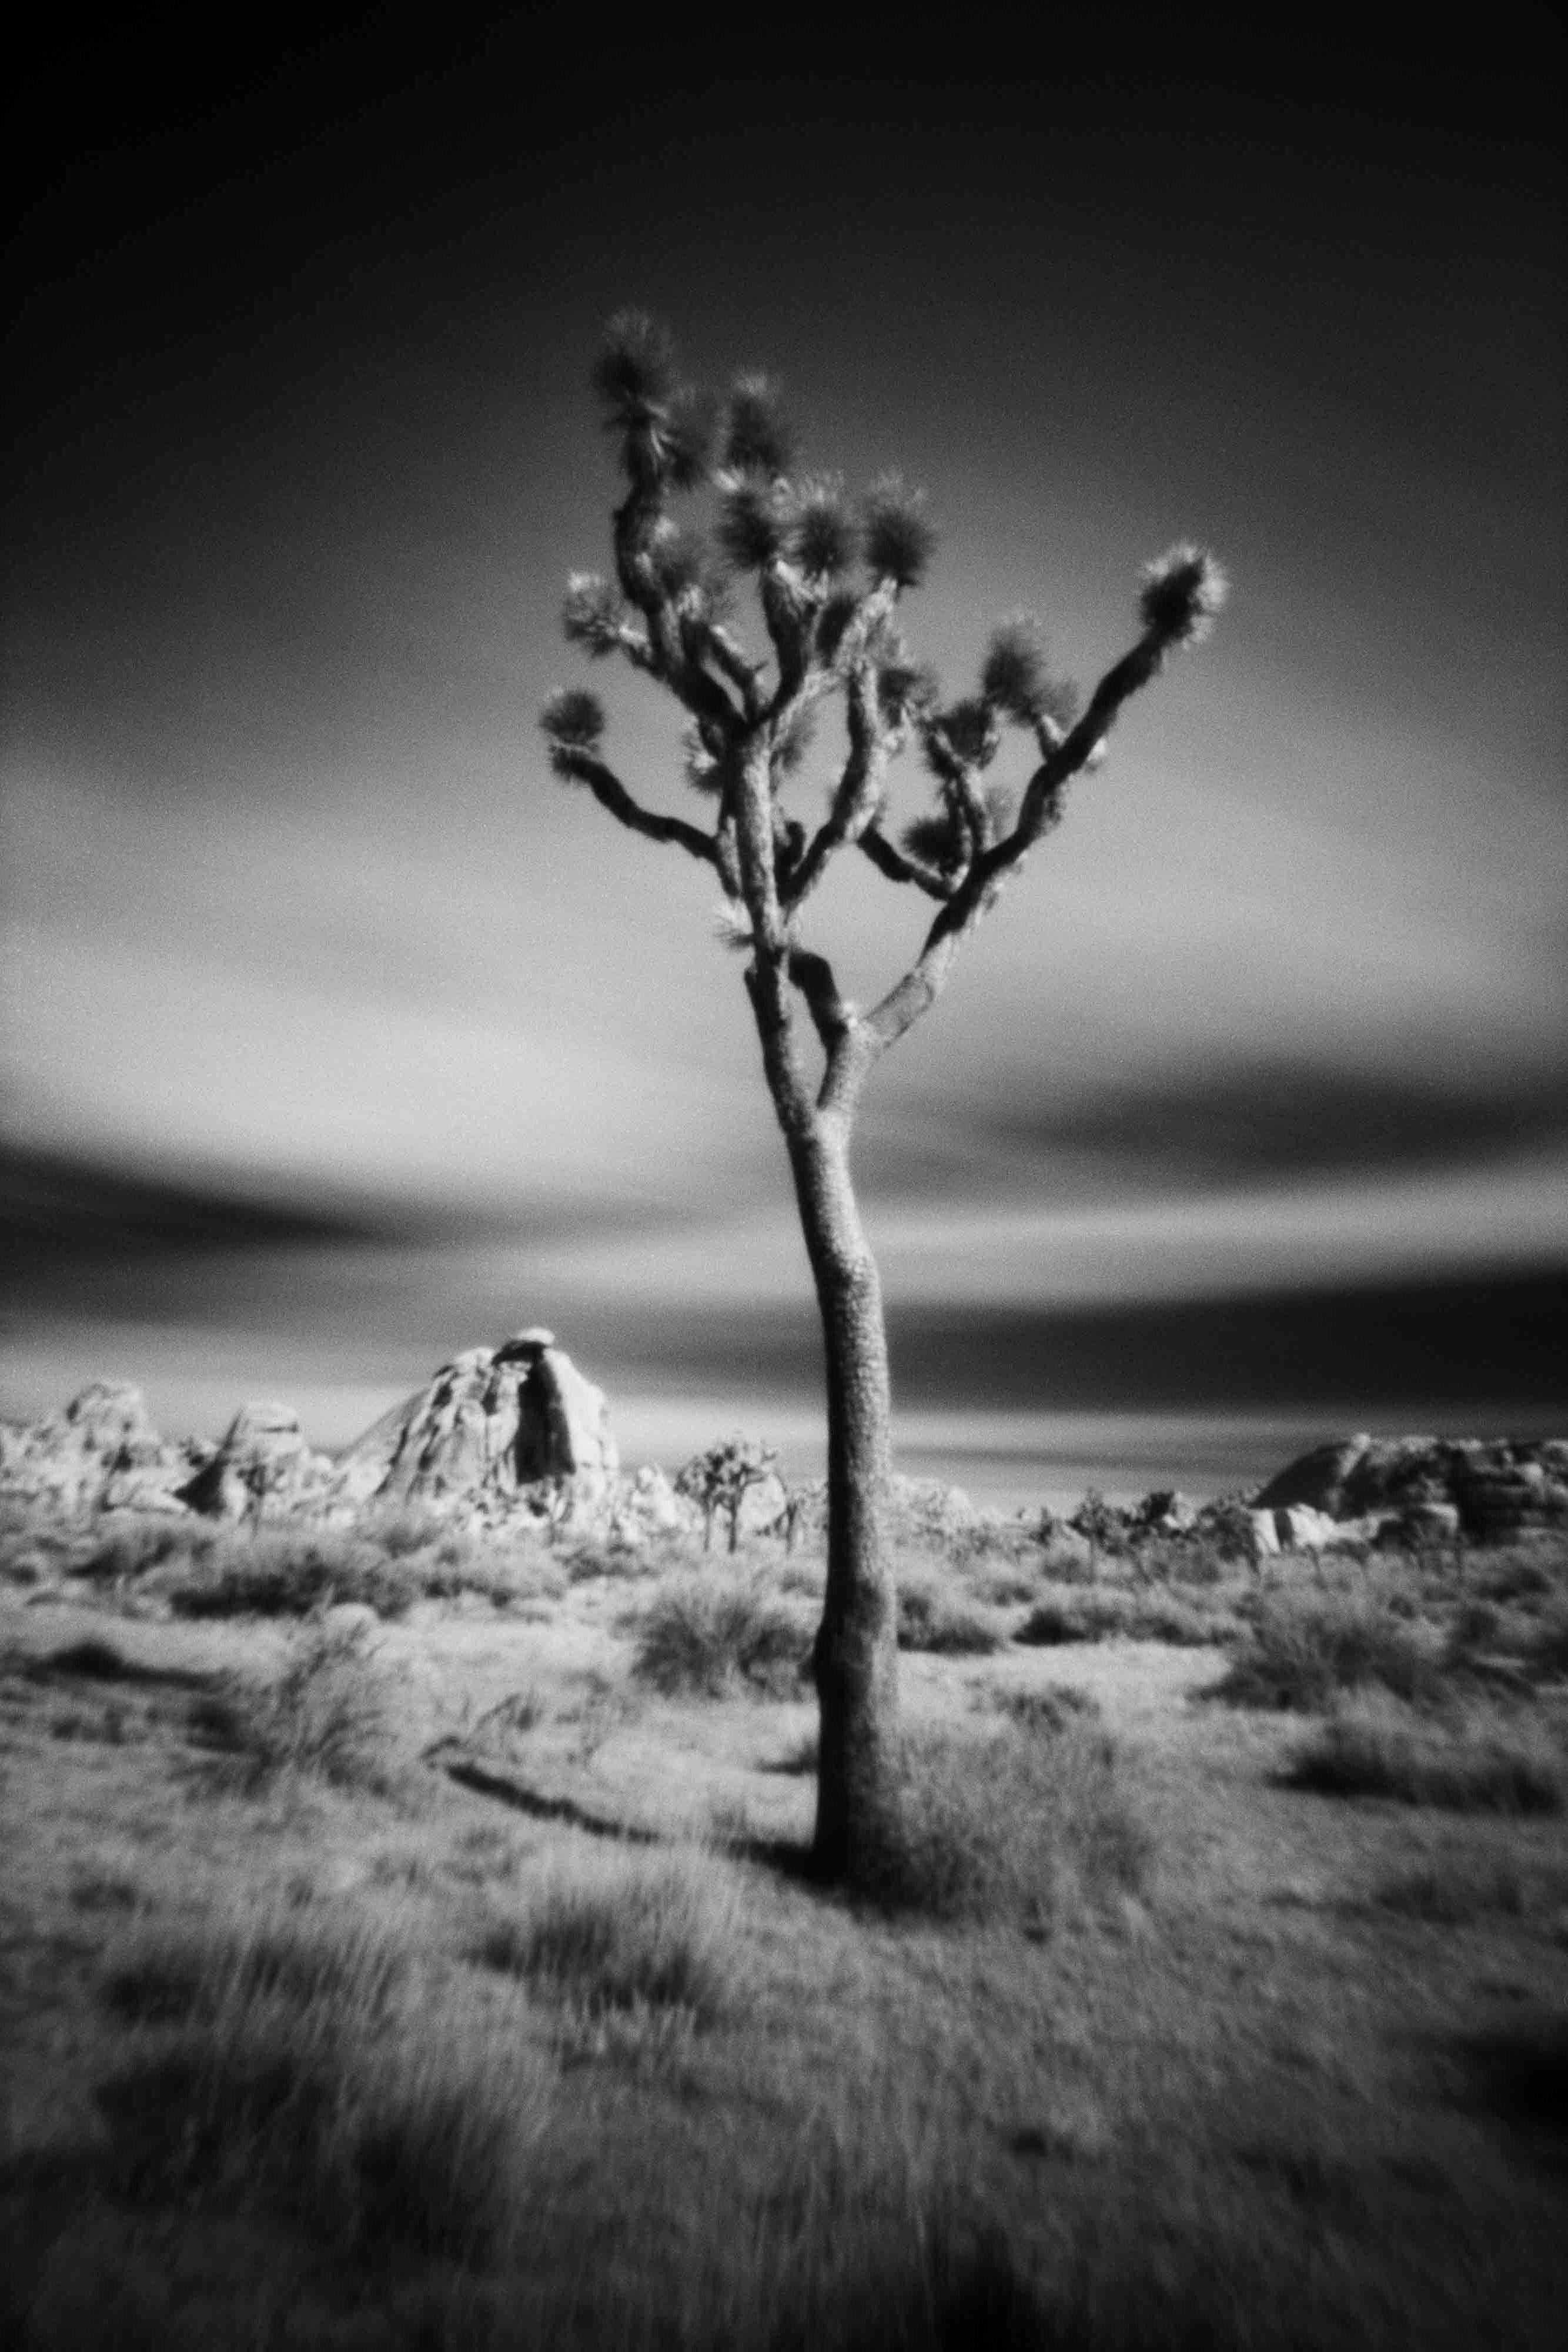 4" x 5" B&W Landscape Photography; 'Apr24_2012 Joshua Tree'